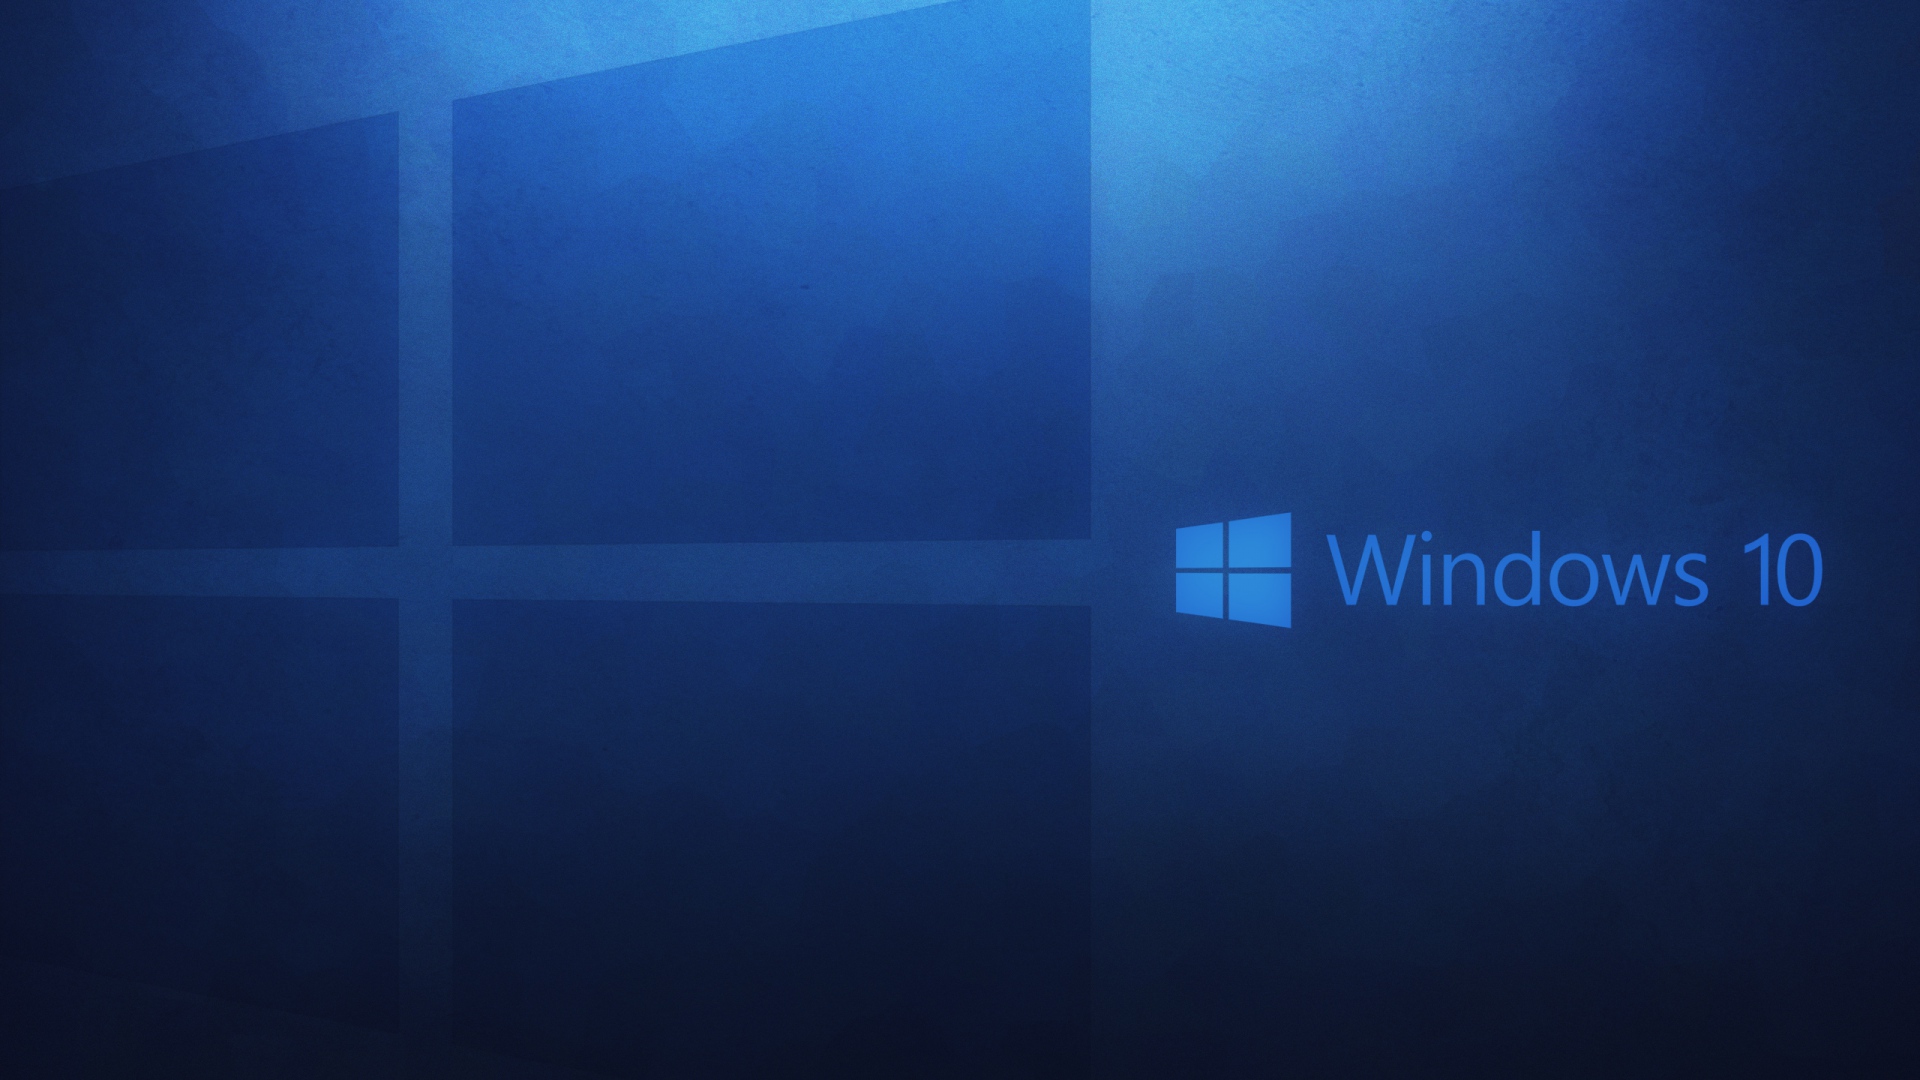 HD Background Windows 10 Wallpaper Microsoft Operating System Blue 1920x1080